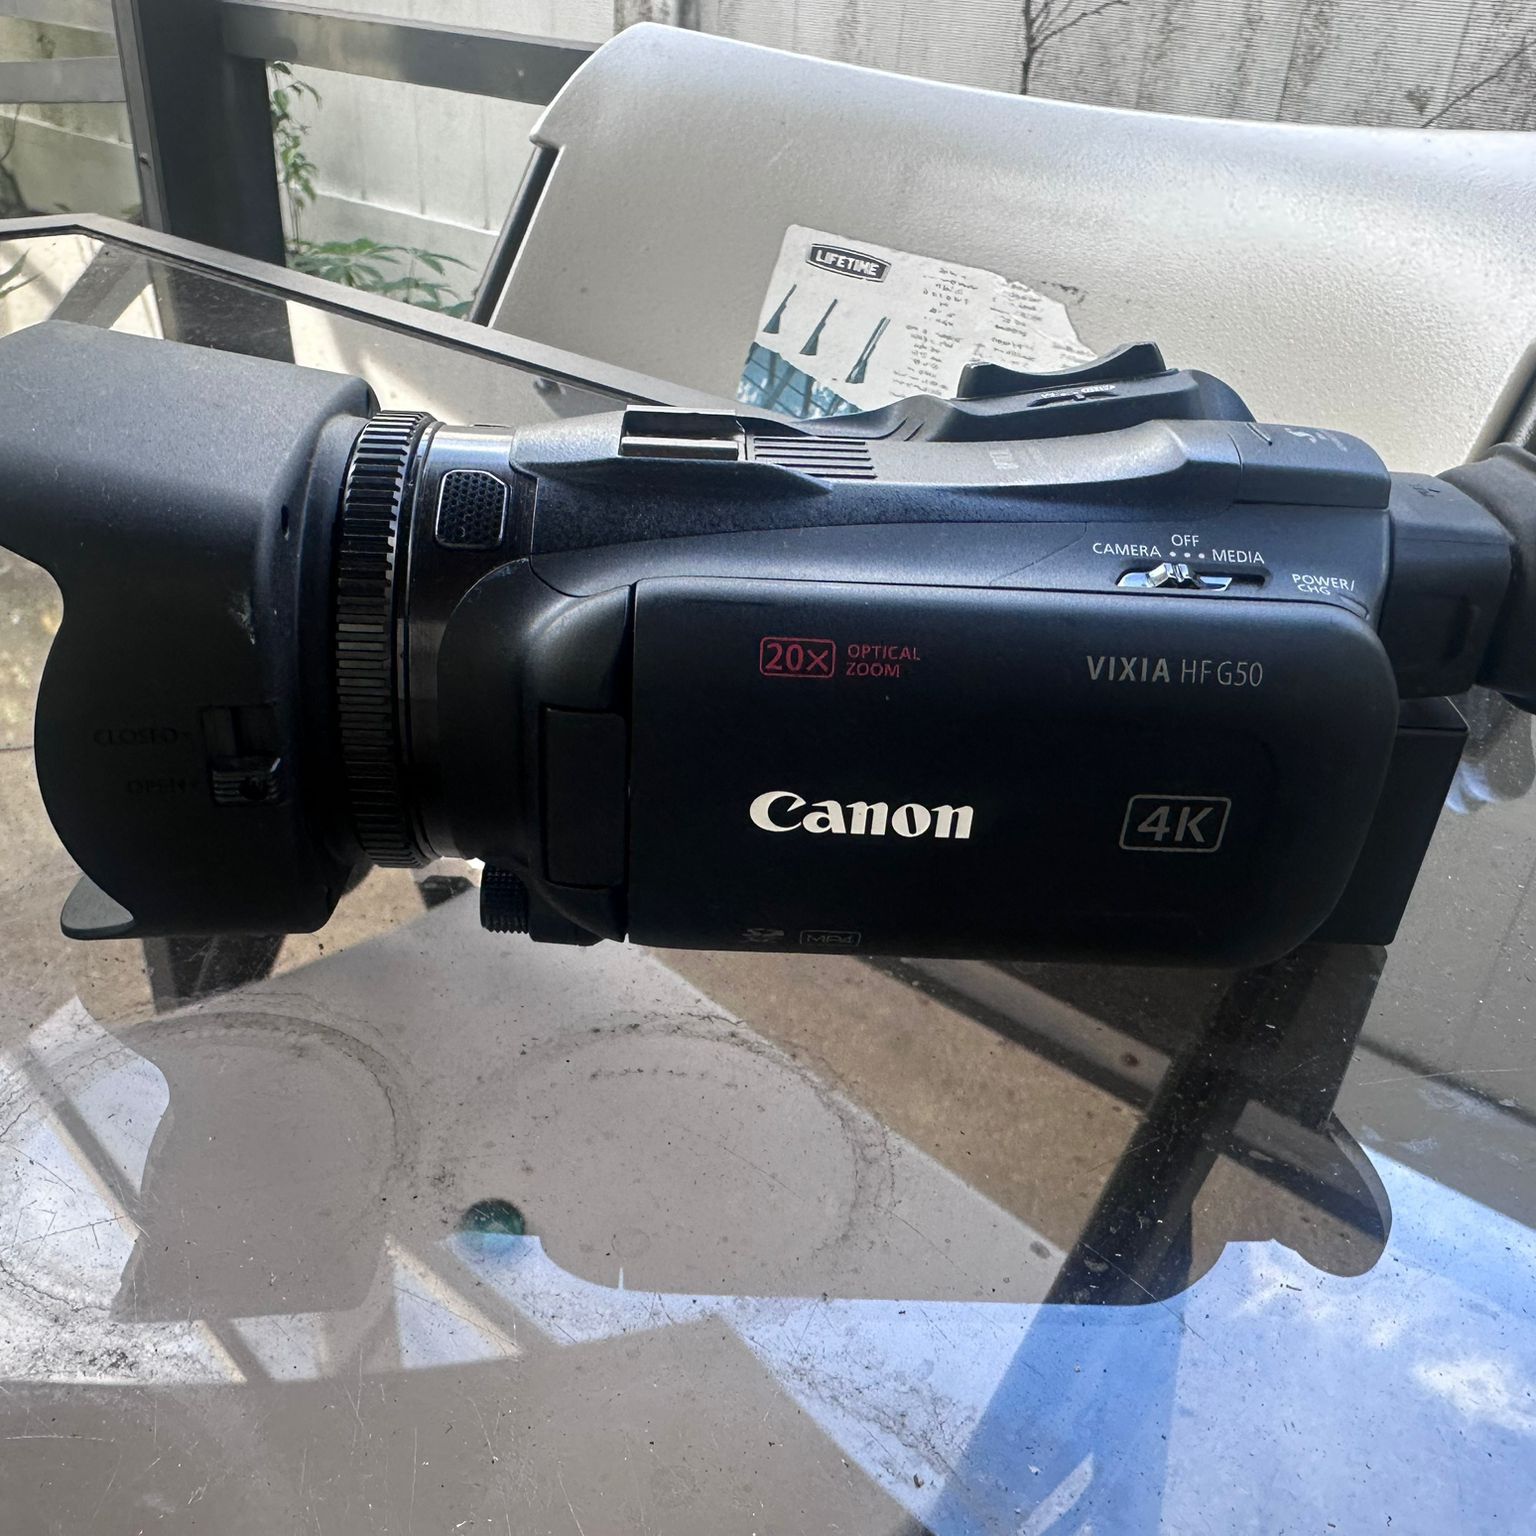 Camcorder Canon 4K